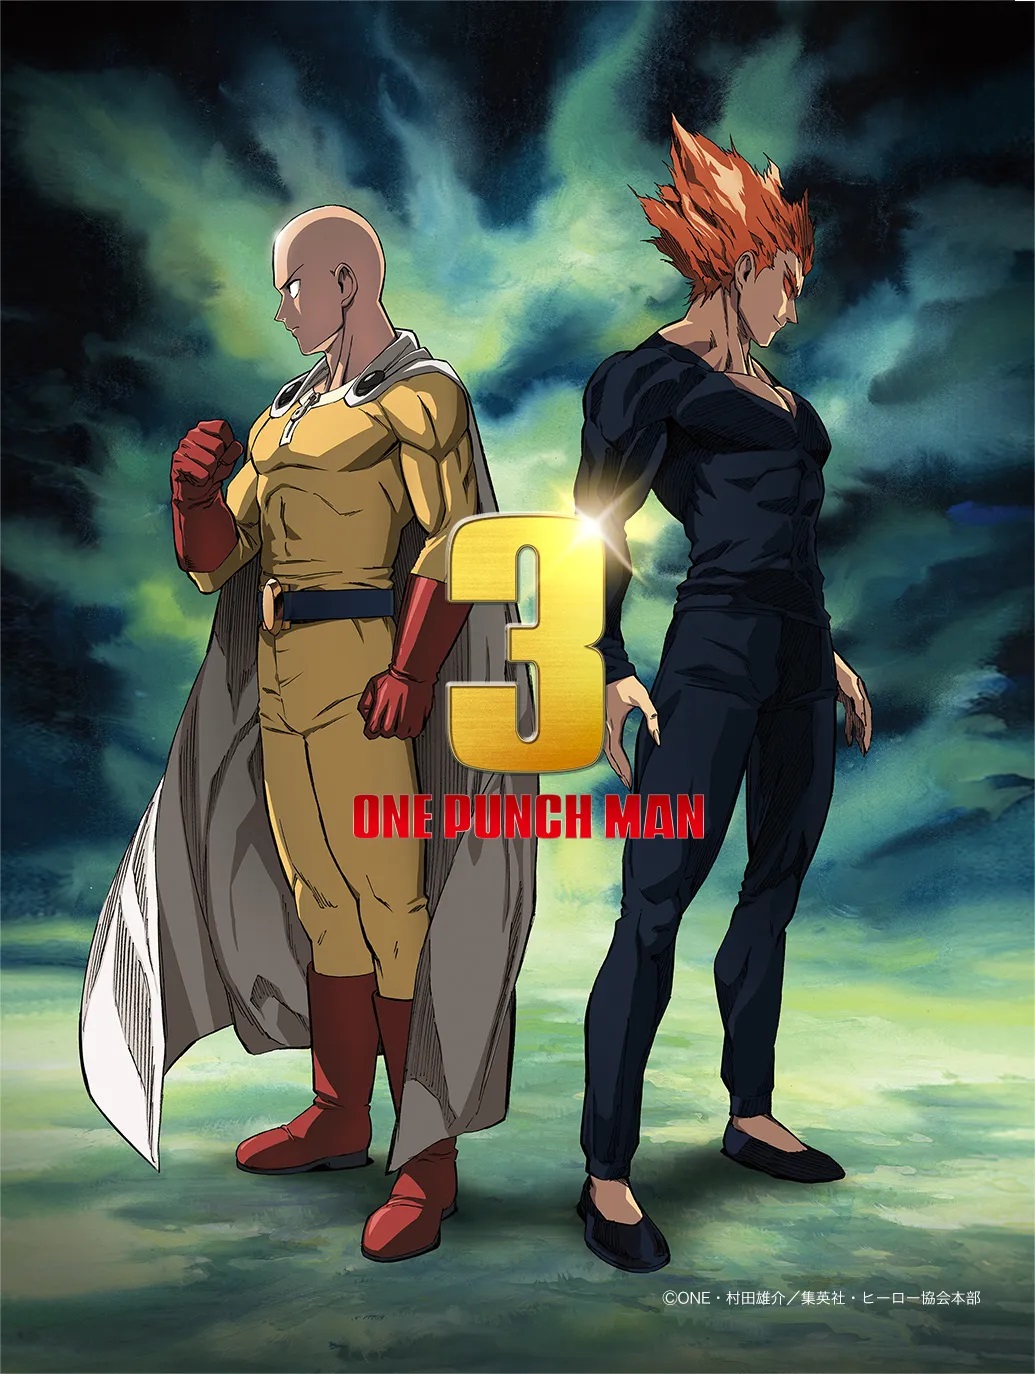 One Punch Man Season 3 Poster